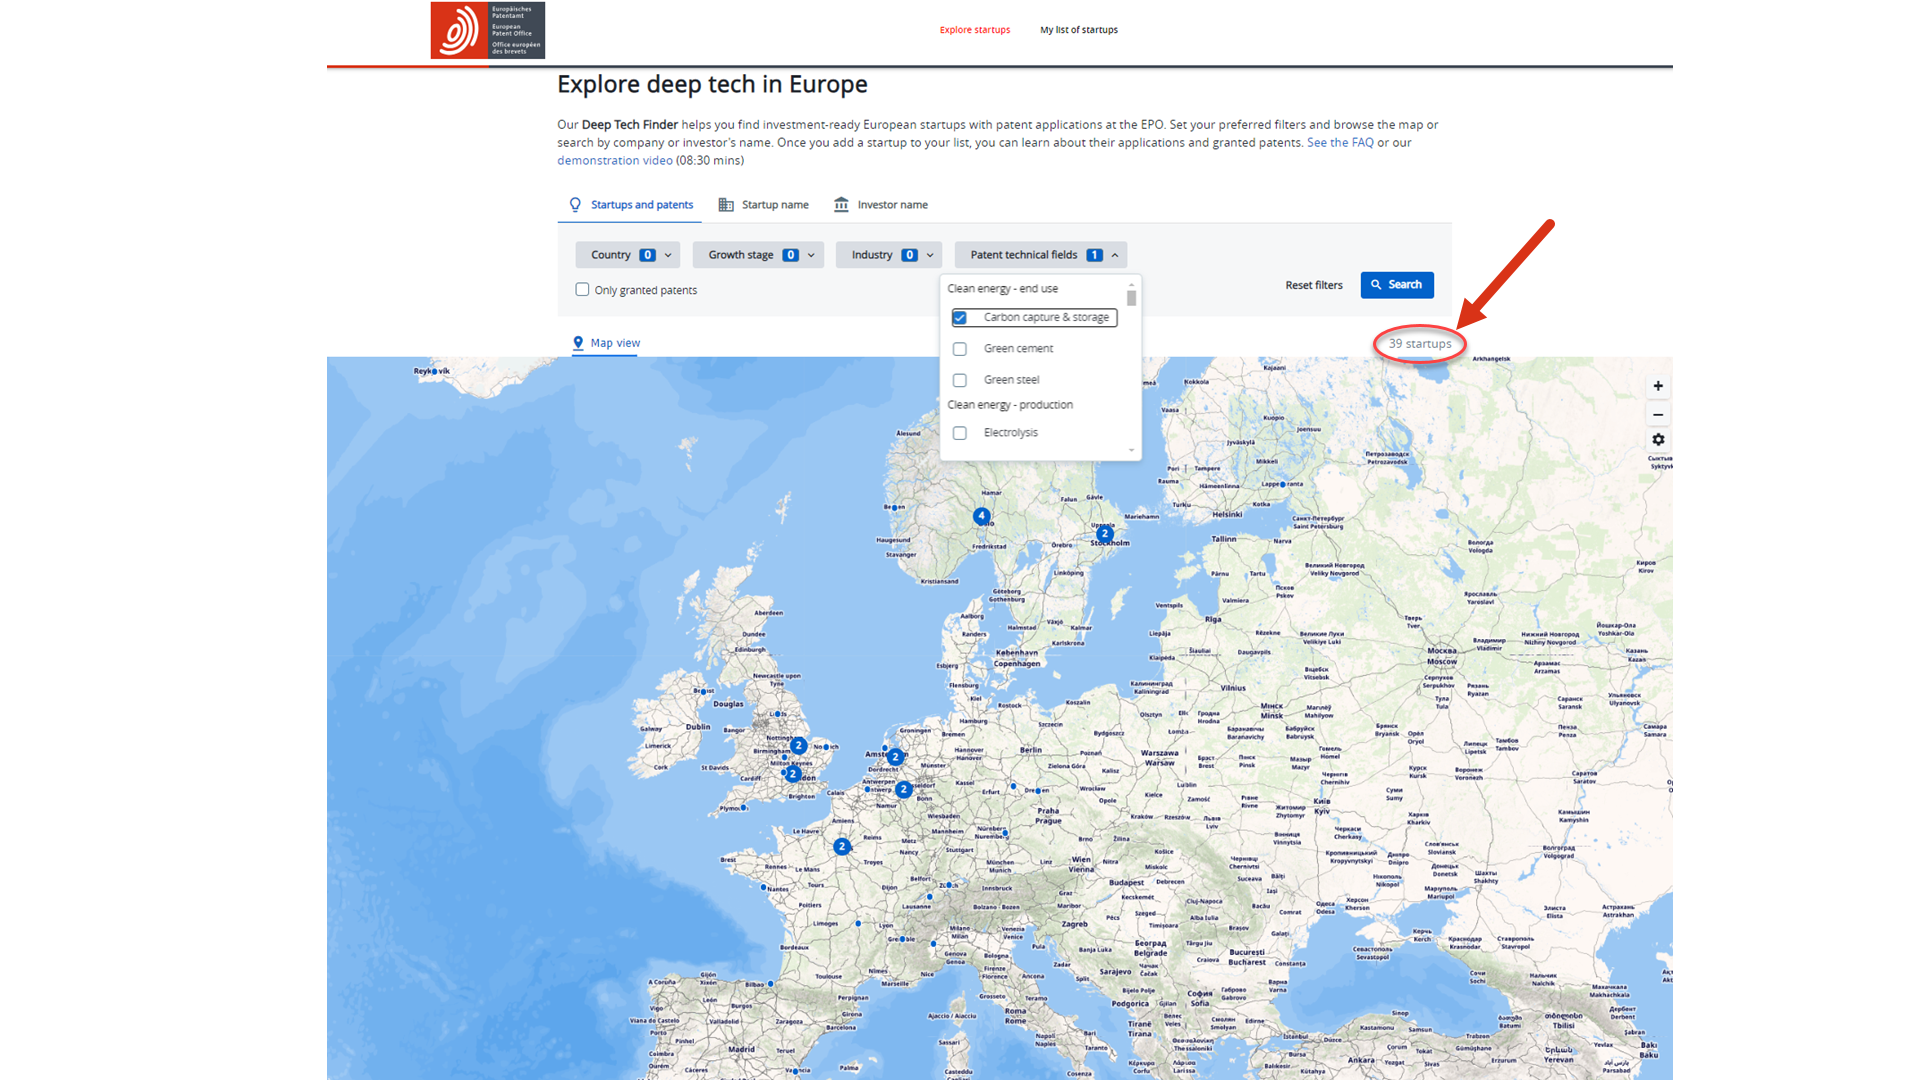 Explore deep tech finder in Europe - screenshot 1